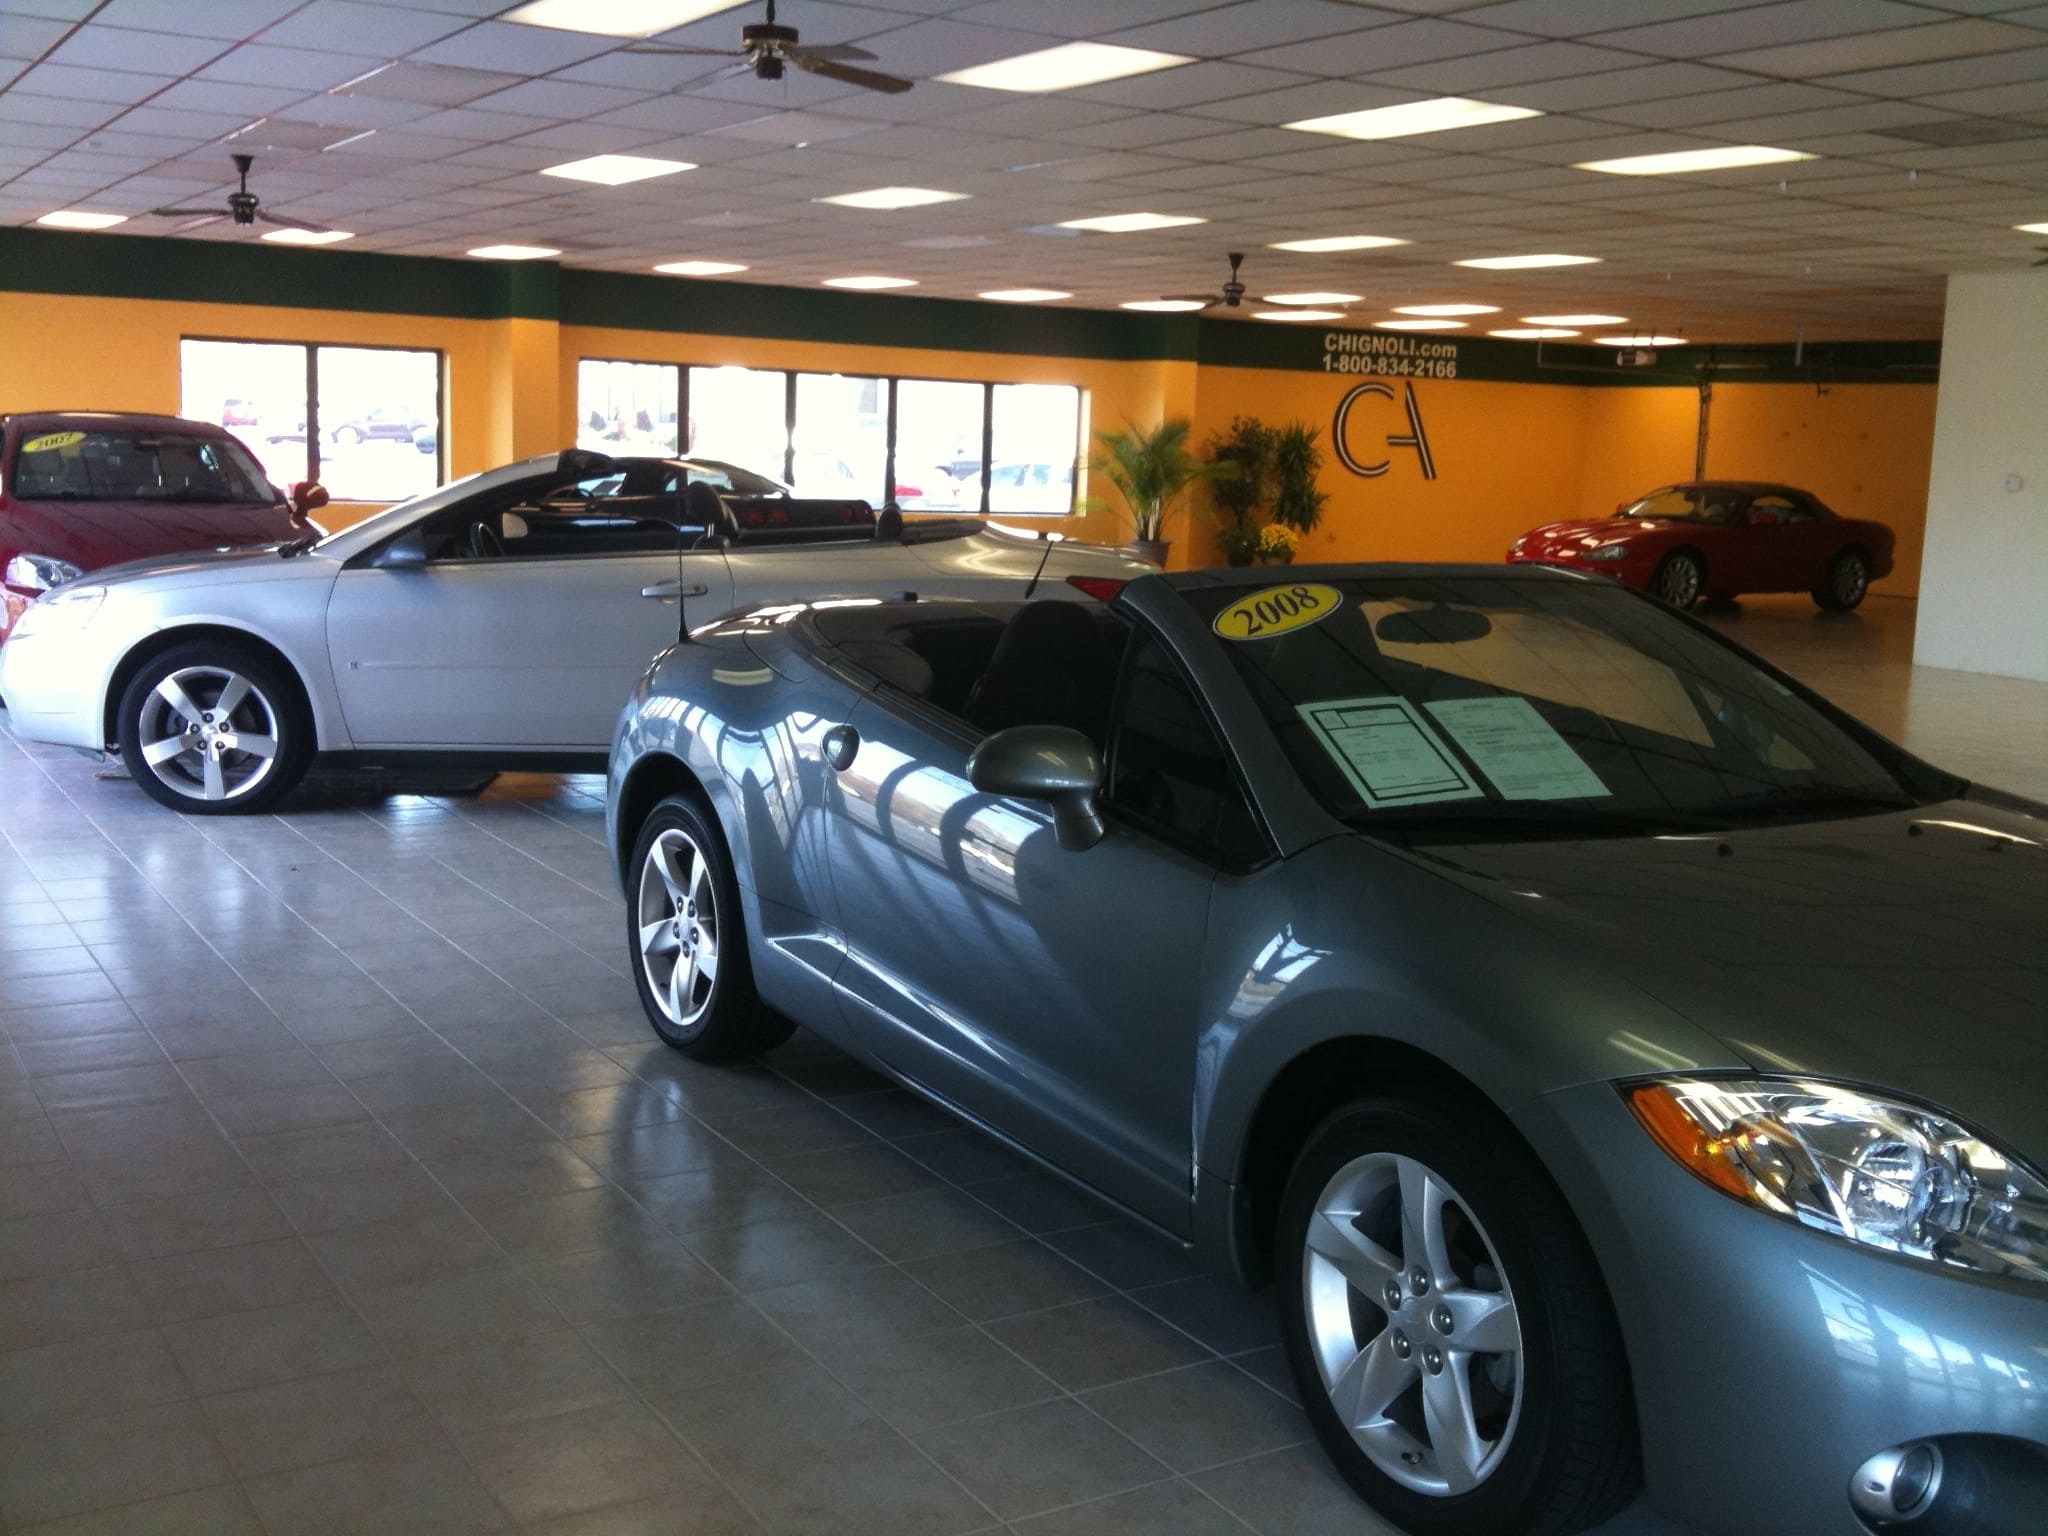 Chignoli Auto Sales - Joliet, IL, US, used car dealerships near me